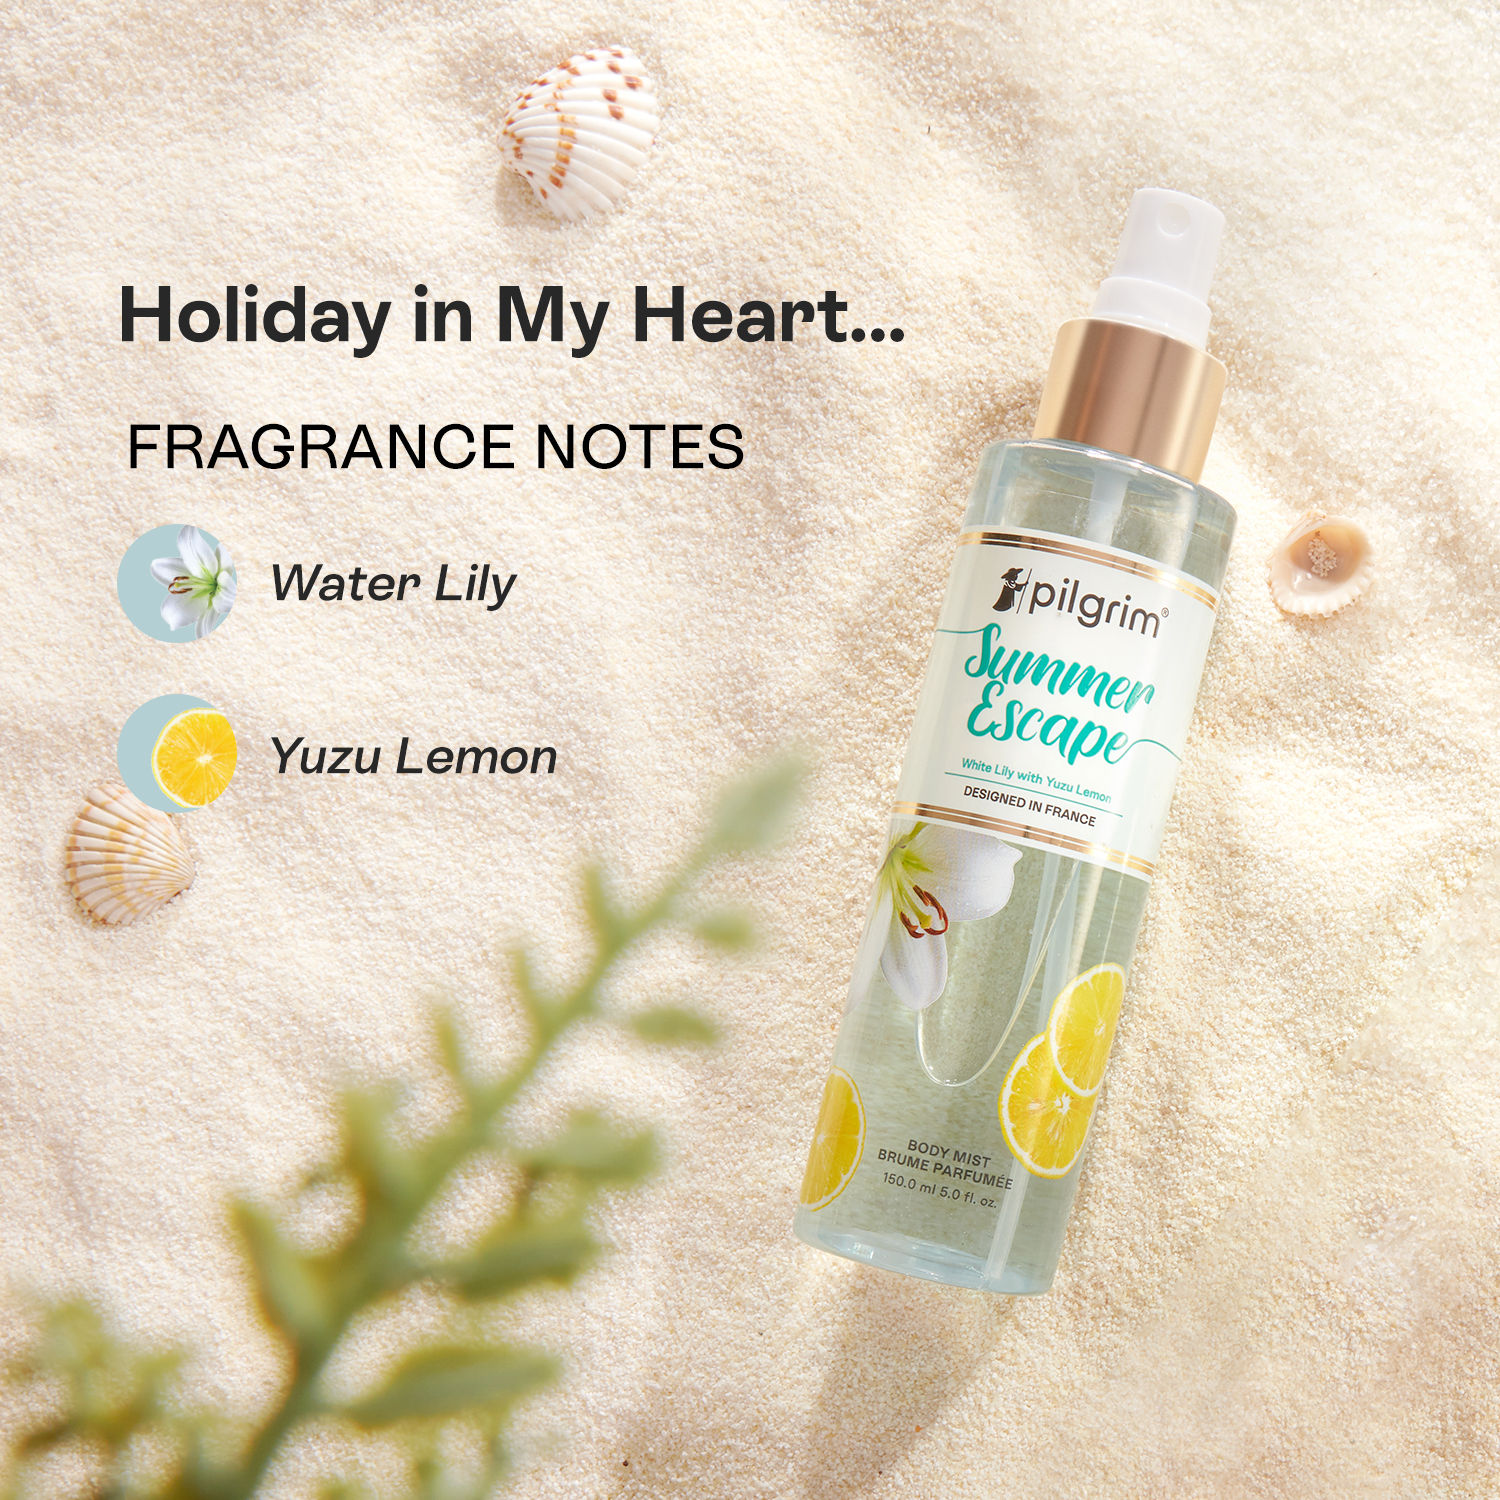 Buy Pilgrim Summer Escape Body Mist (White Lily with Yuzu Lemon)| Citrus Body Mist | Long Lasting Perfume for Women, Pack of 2 - Purplle